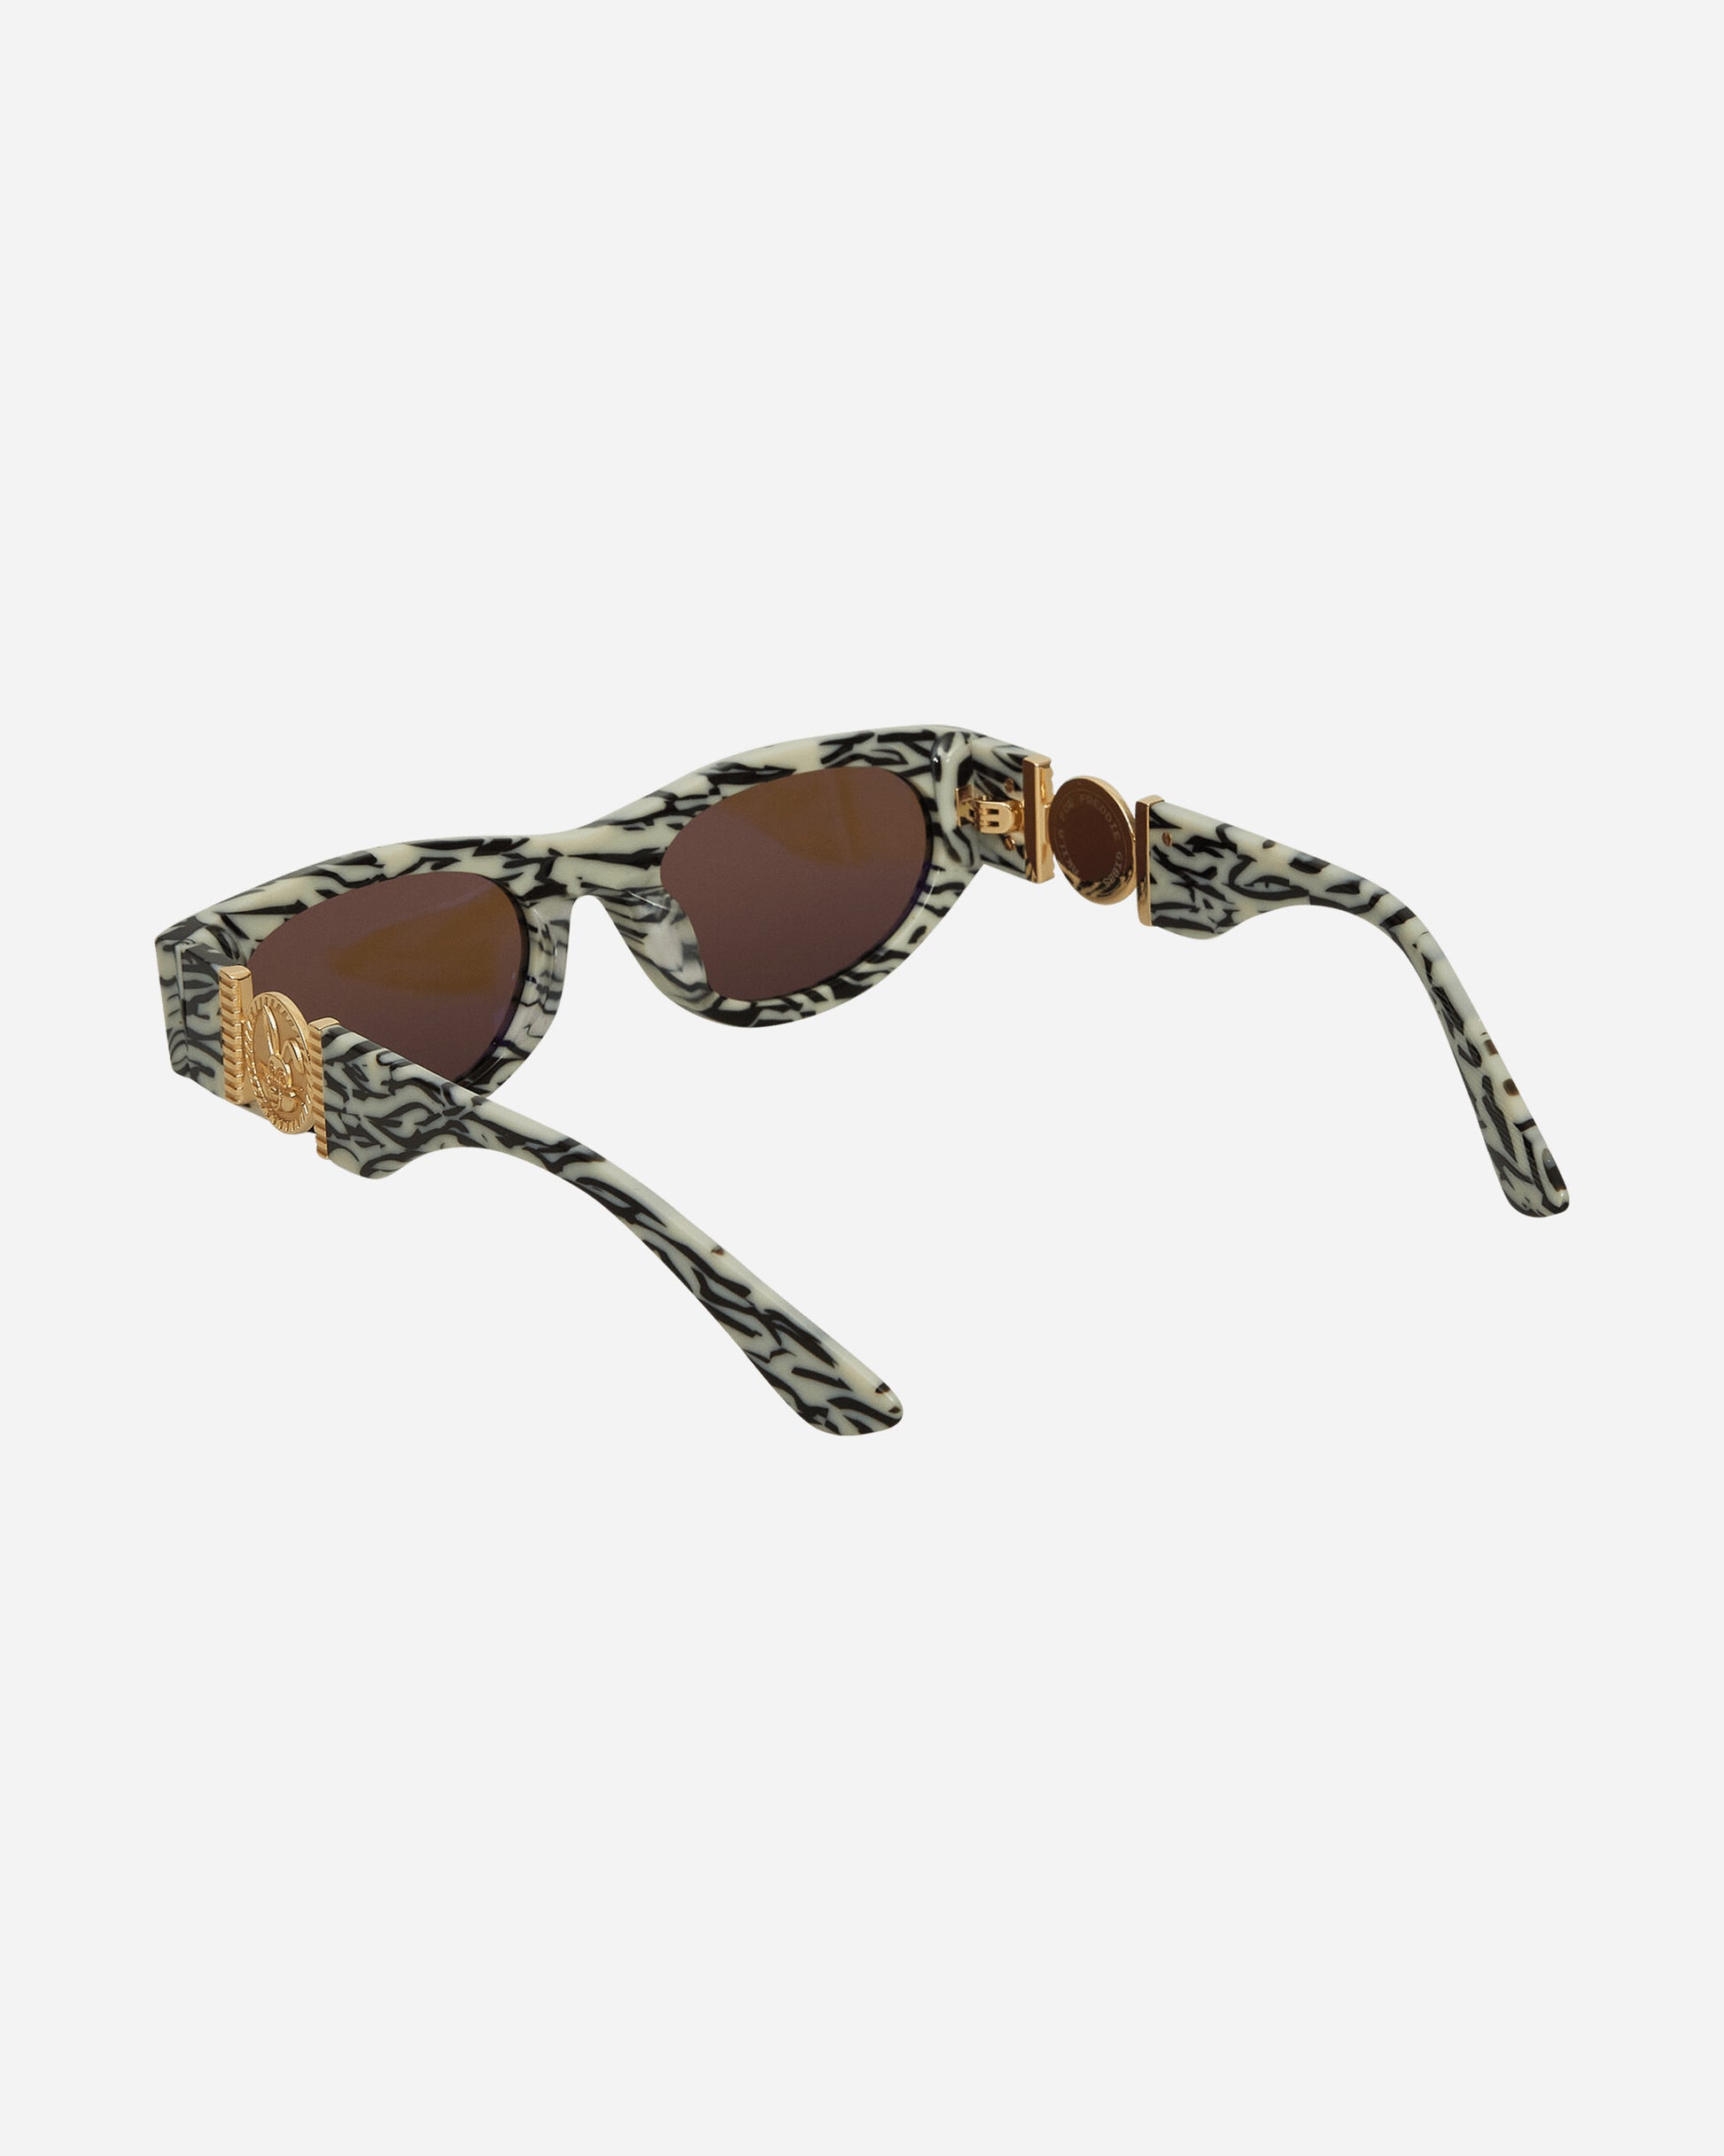 AKILA Vertigo X Freddie Gibbs Zebra Eyewear Sunglasses 210315 94FG